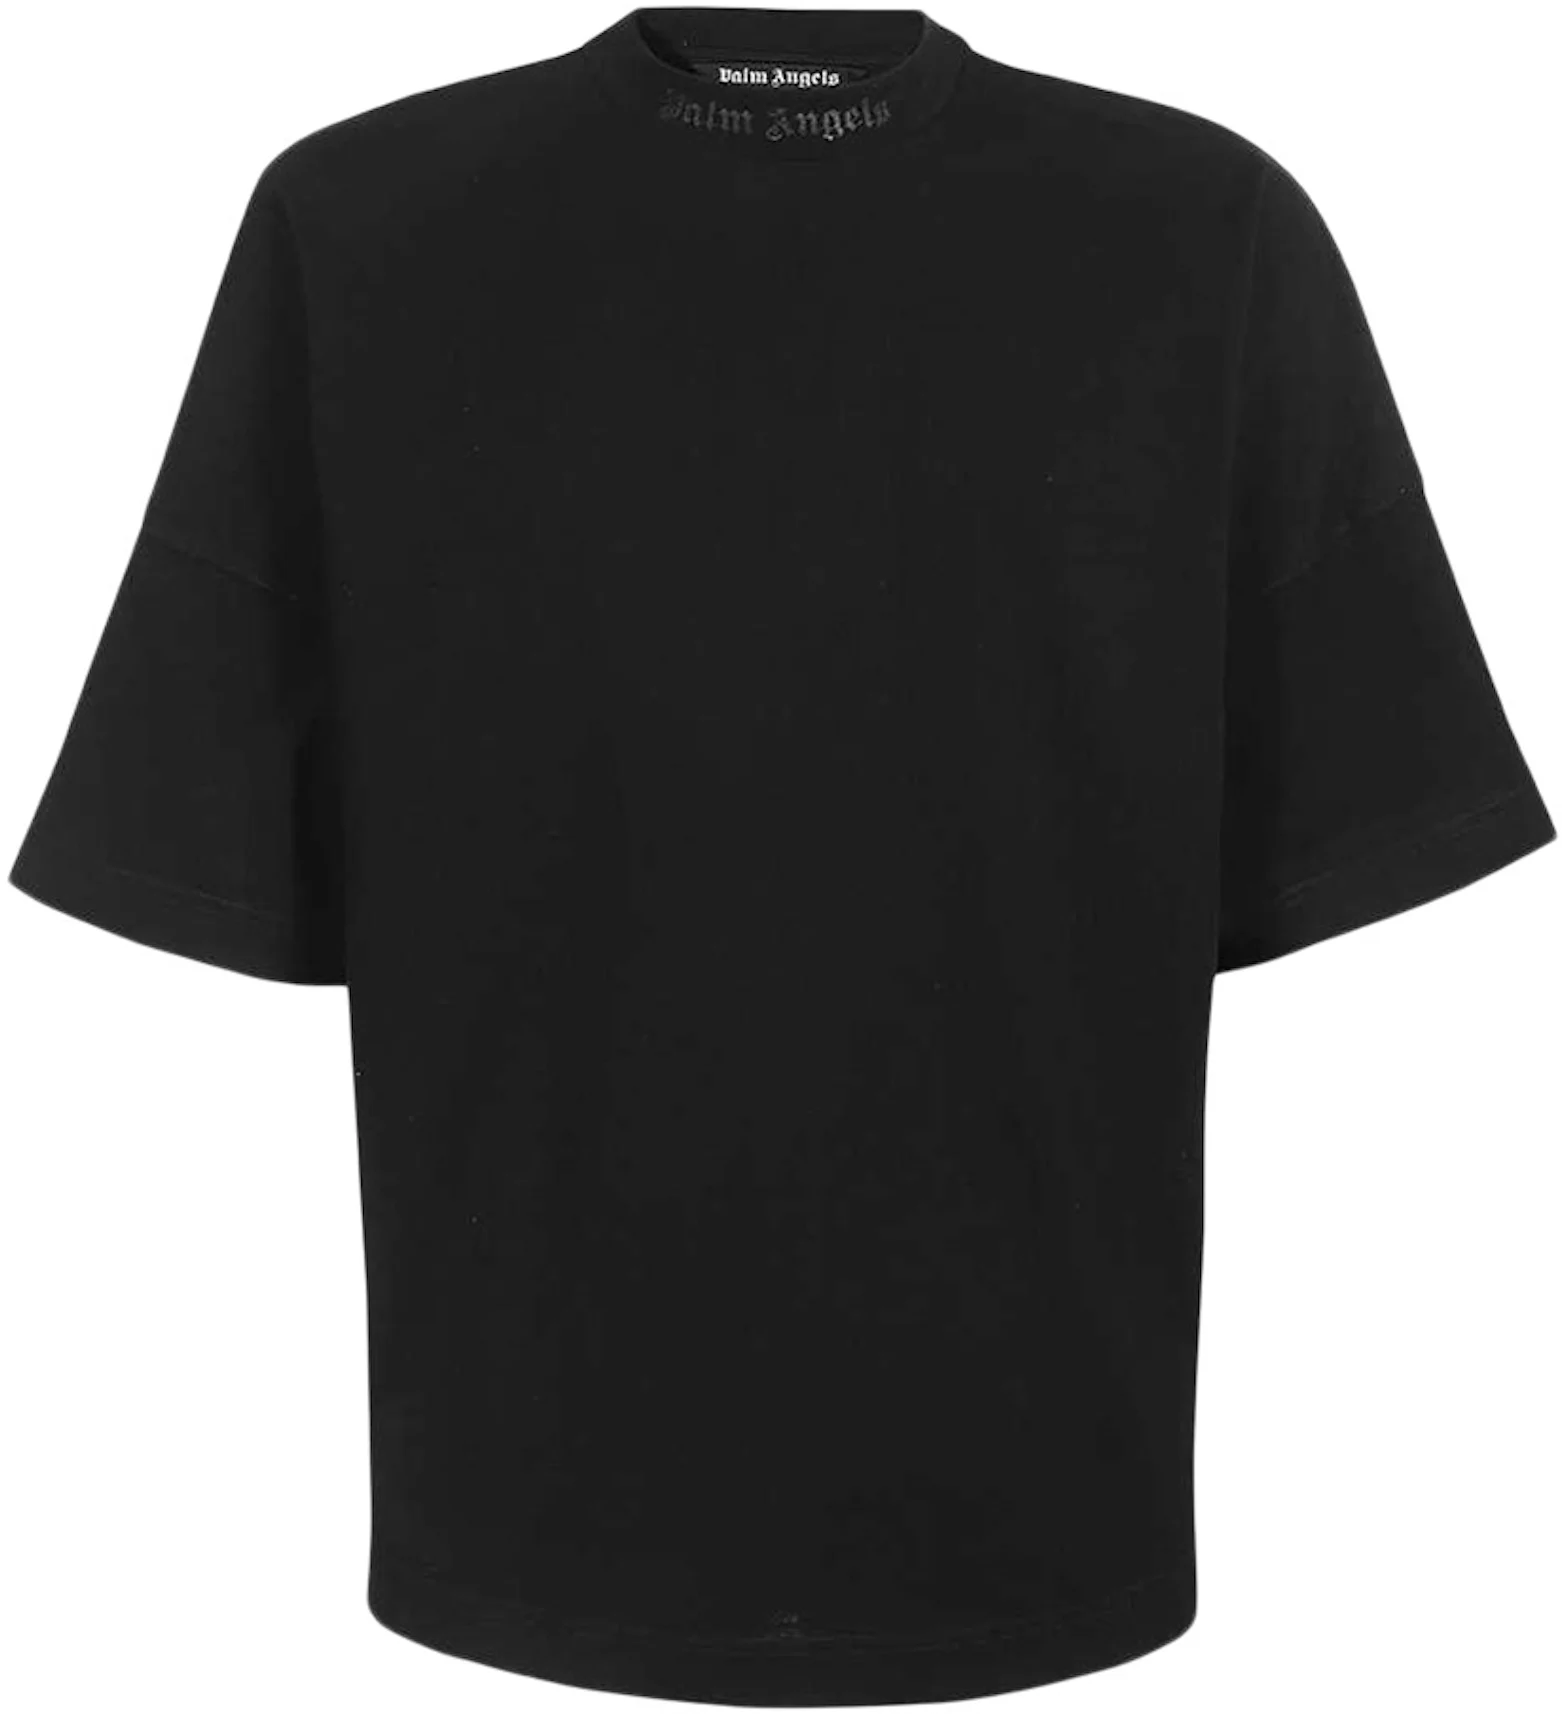 Palm Angels Oversized Mock Neck Glitter Logo T-Shirt Black/Black